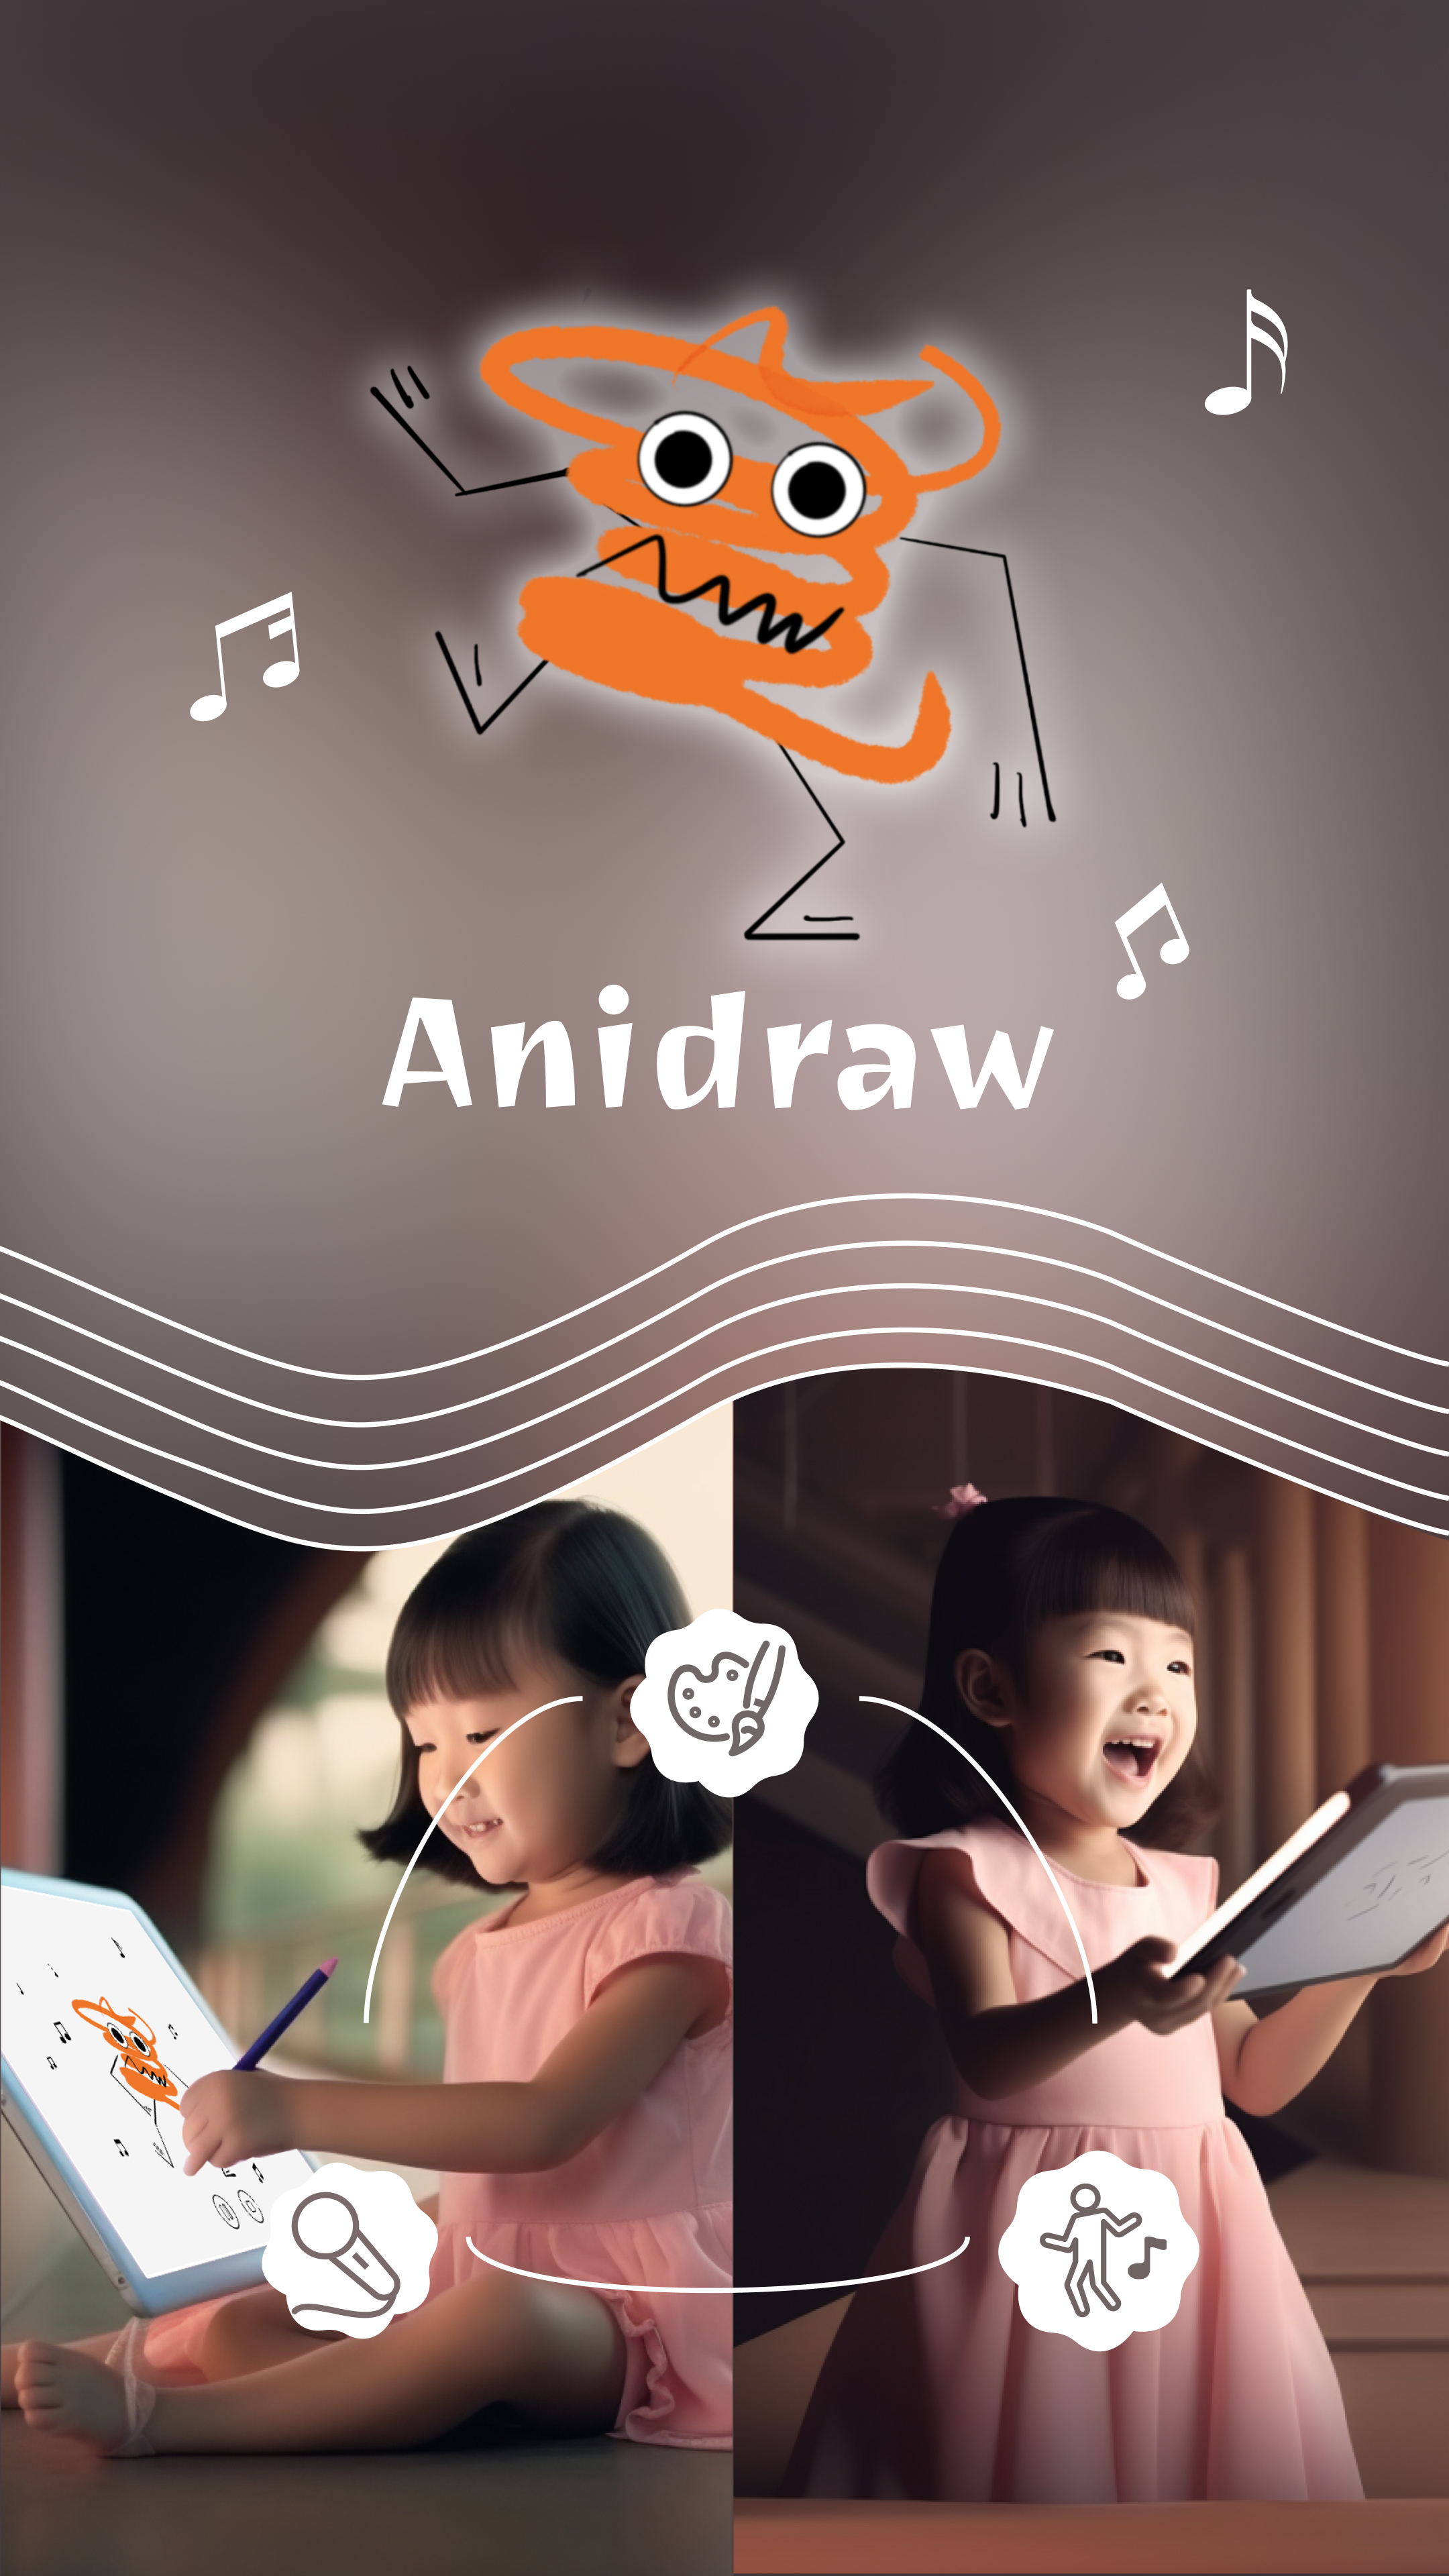 AniDraw: when music and dance meet harmoniously